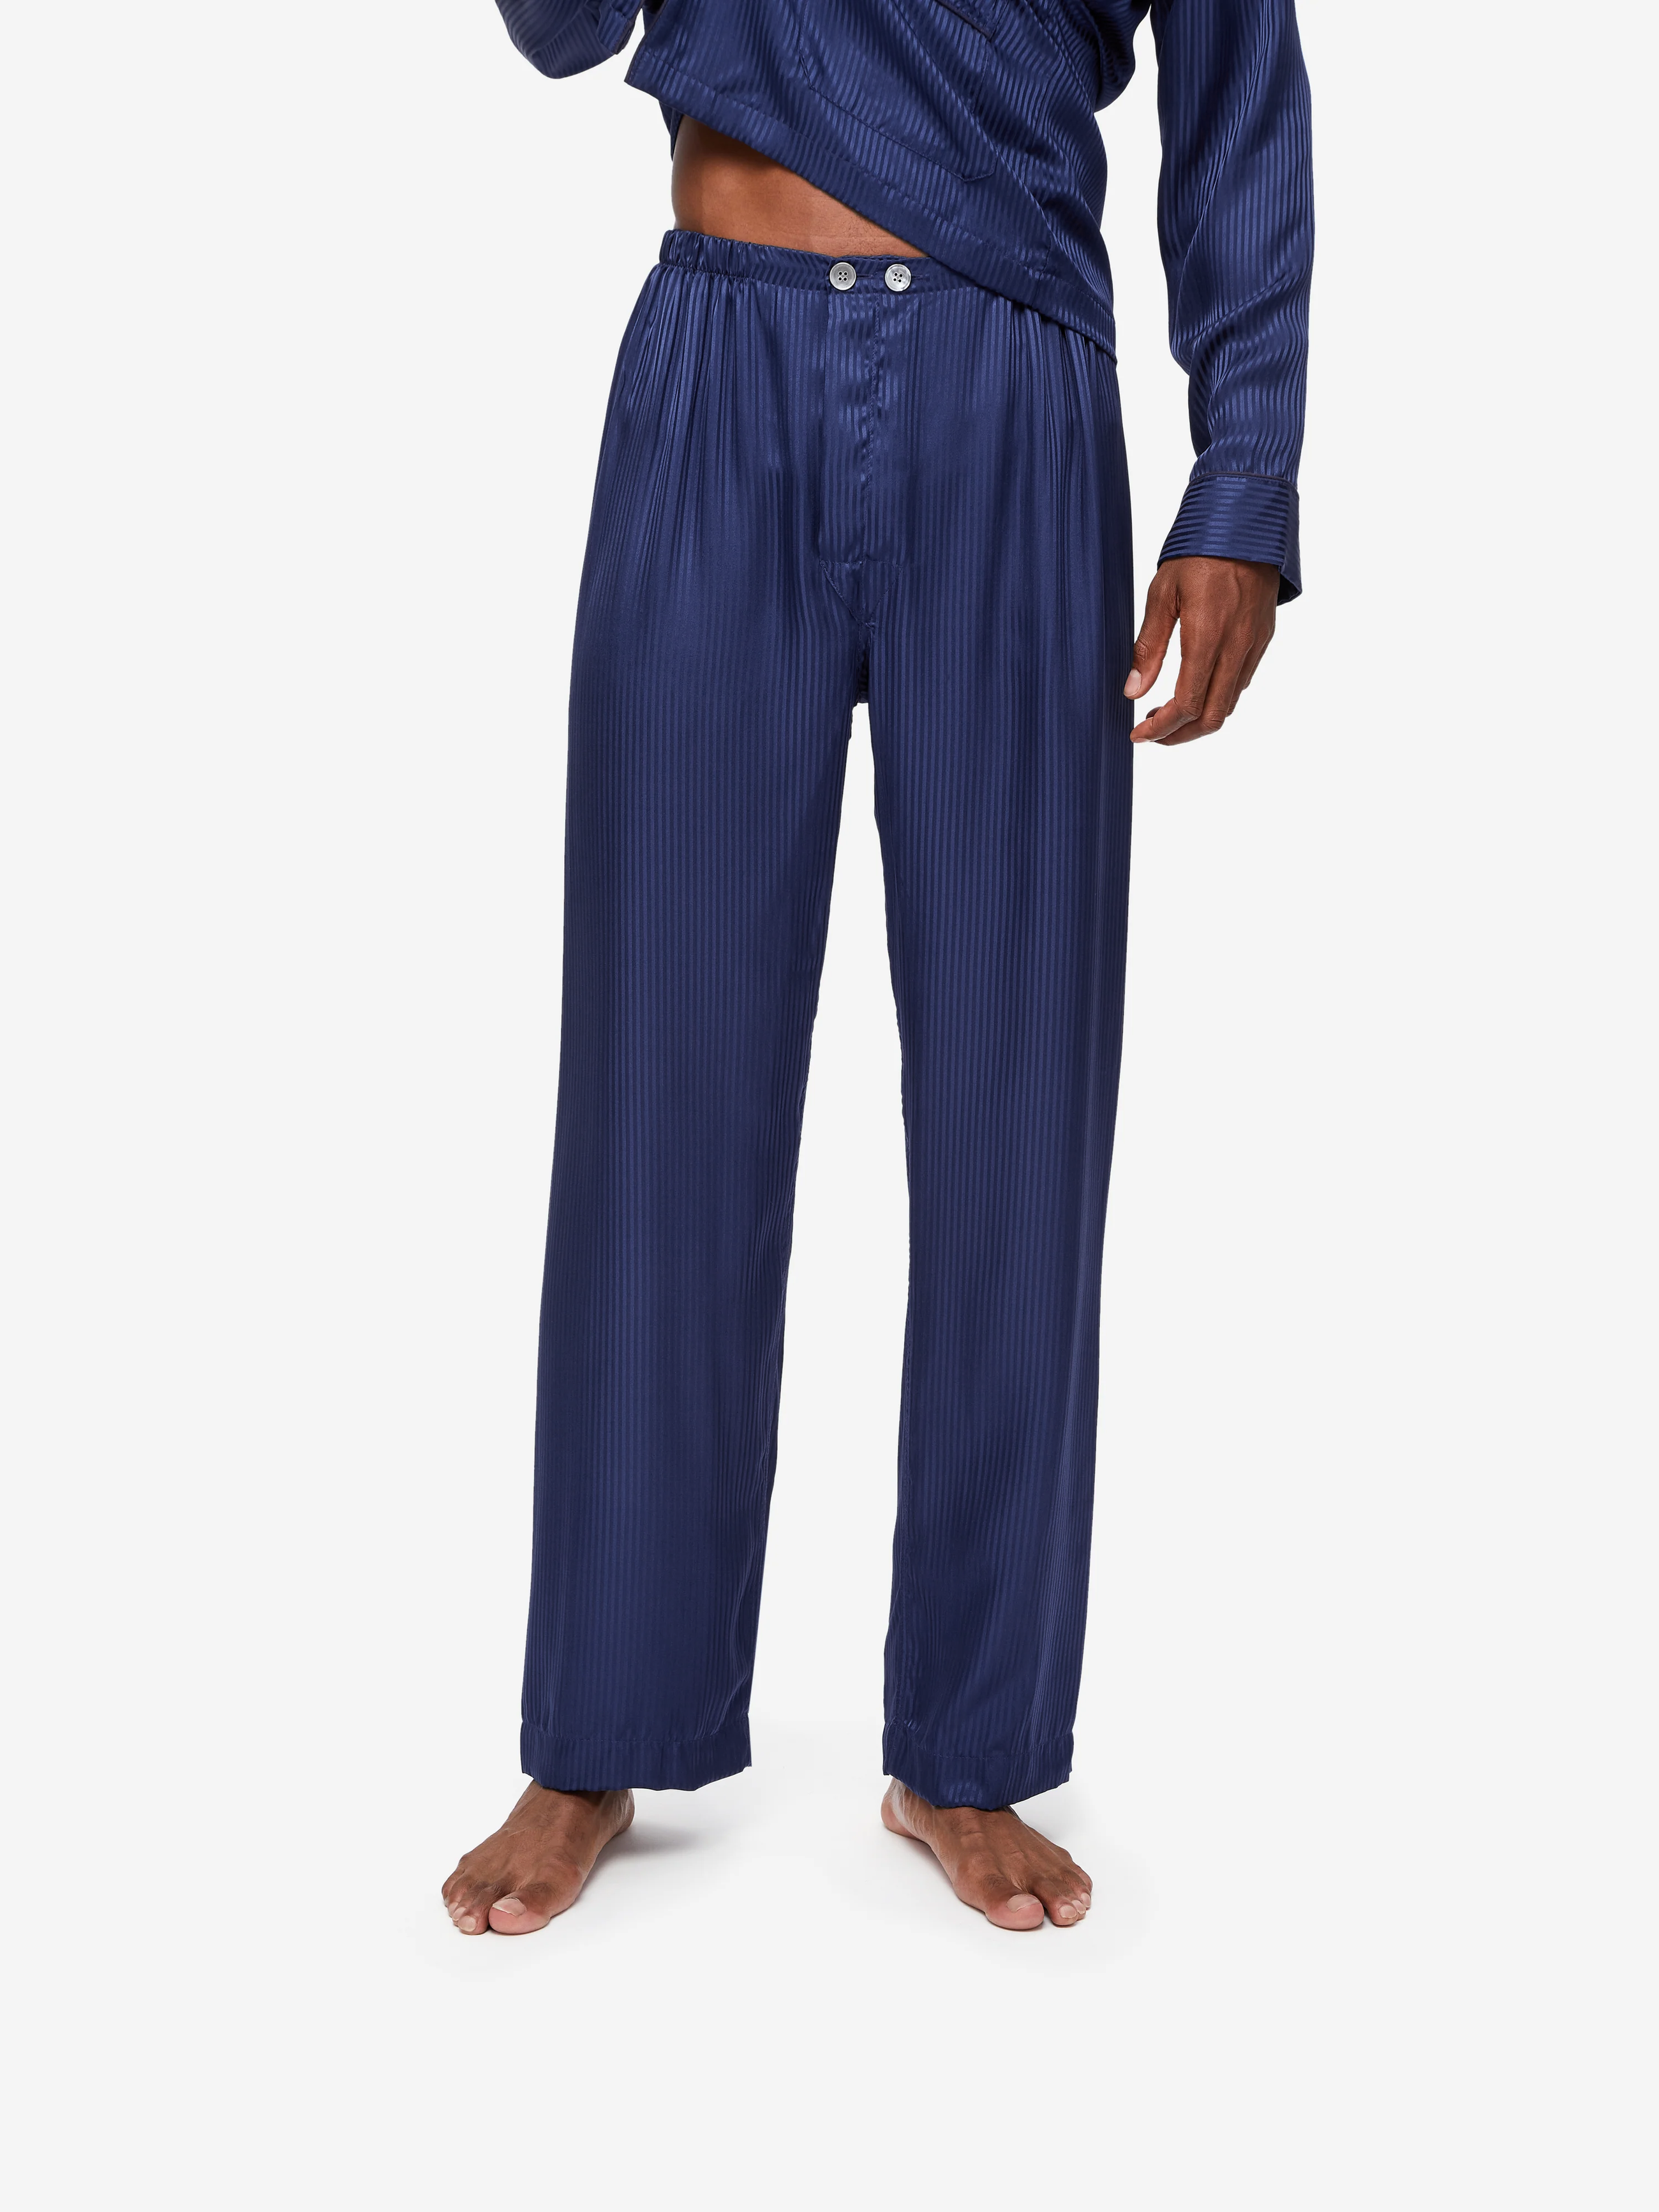 Men's Classic Fit Pyjamas Woburn 8 Silk Satin Navy